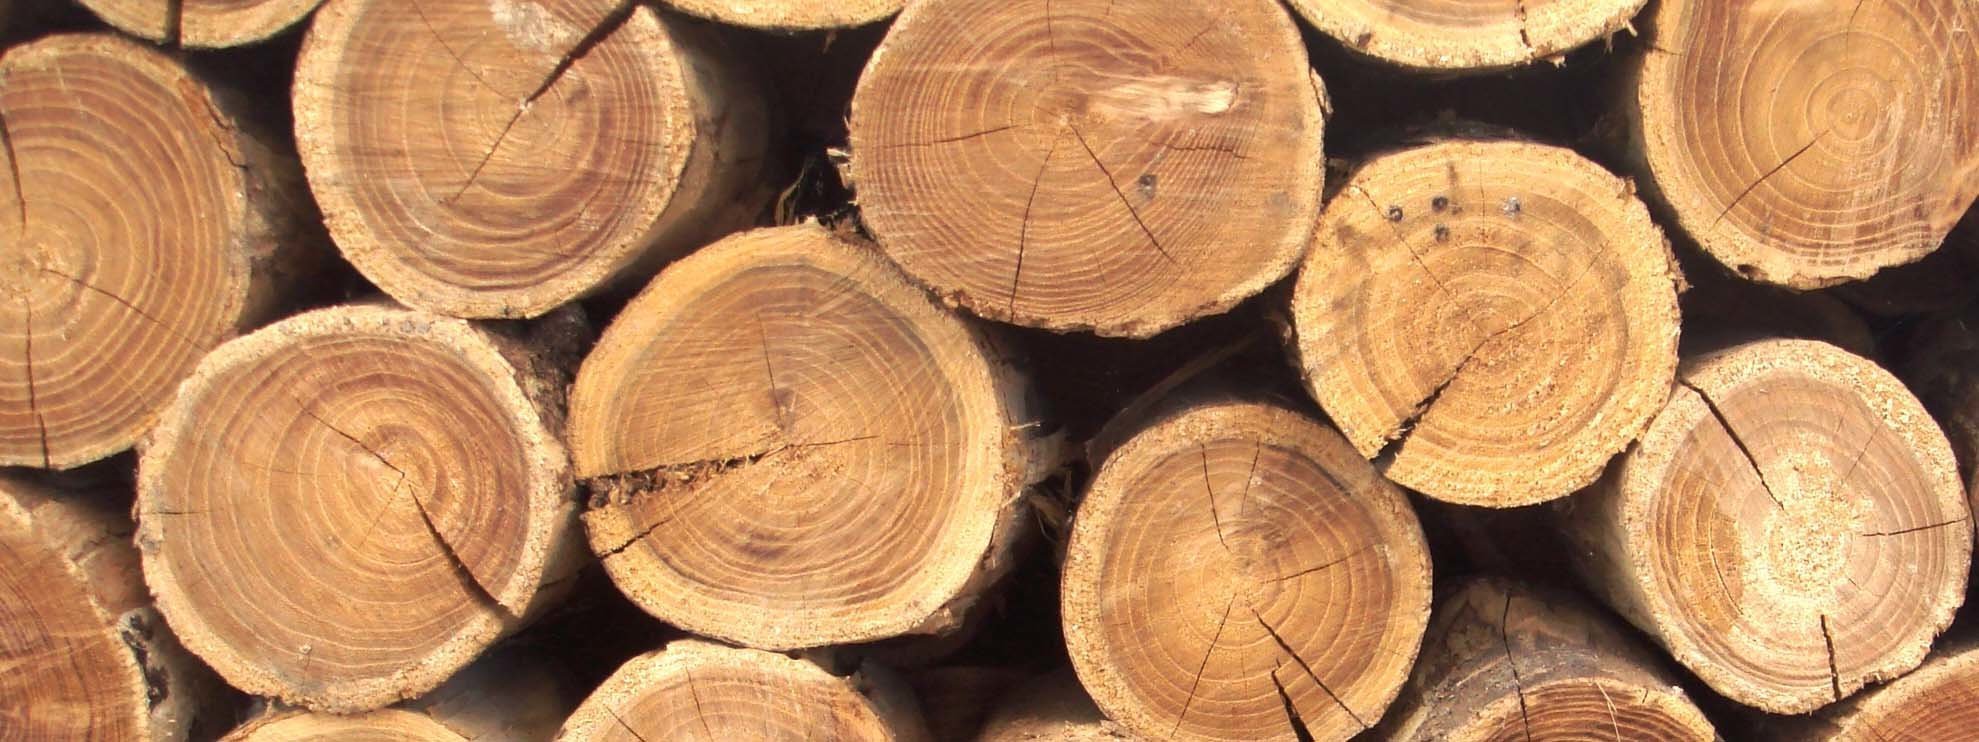 обработка древесины на экспорт